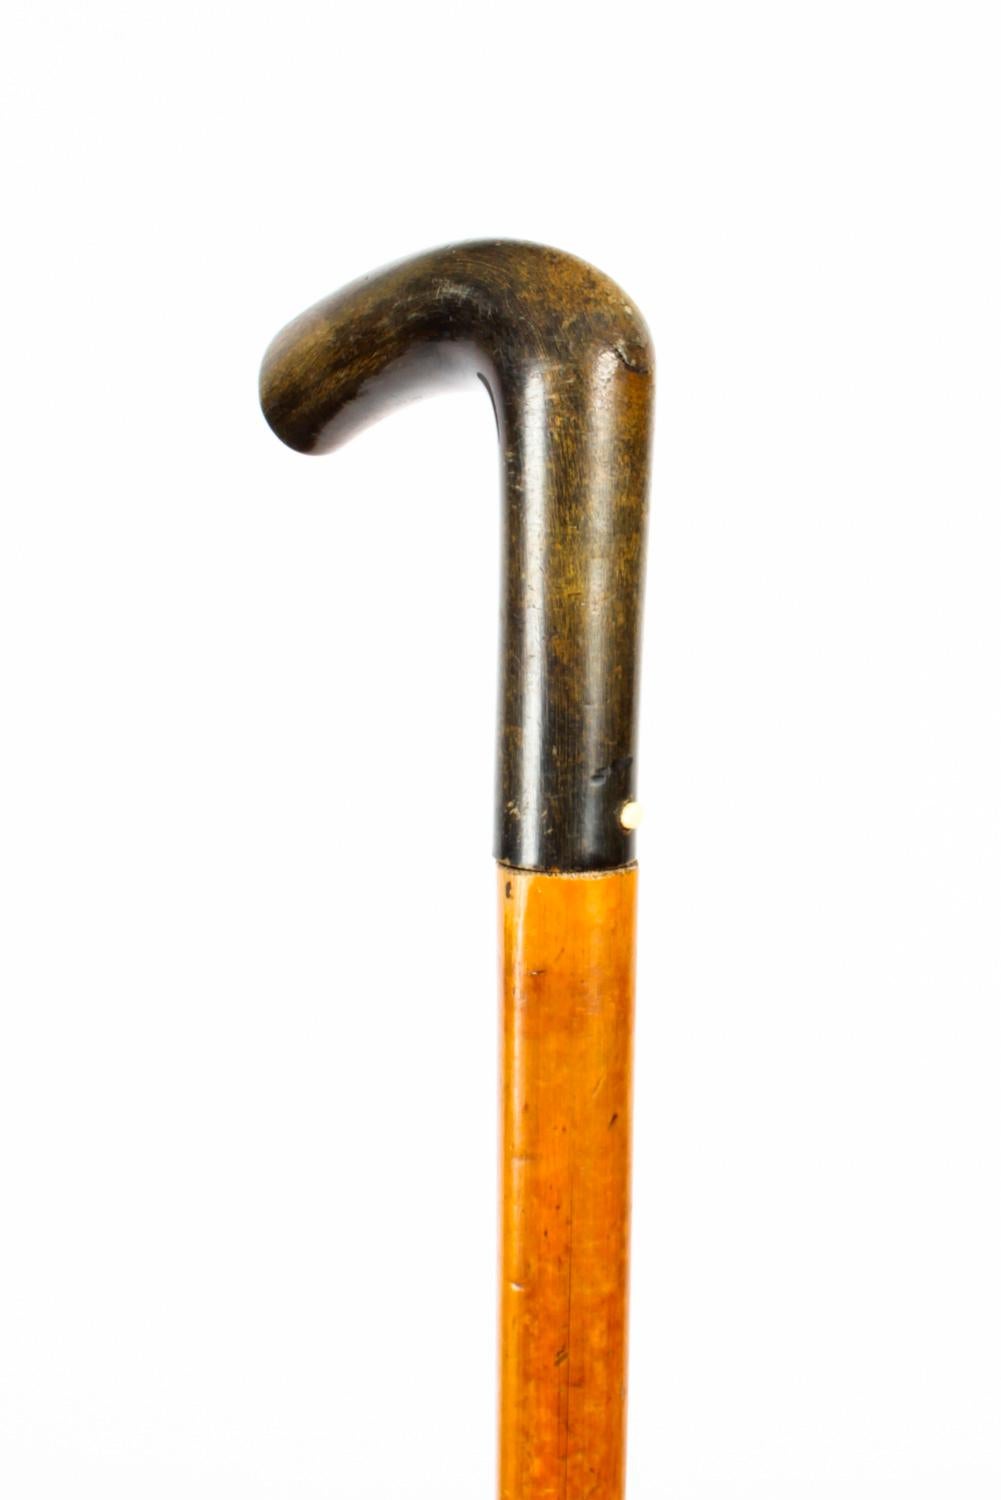 Wood Antique English Horn & Malacca Sword / Walking Stick Cane, 19th Century